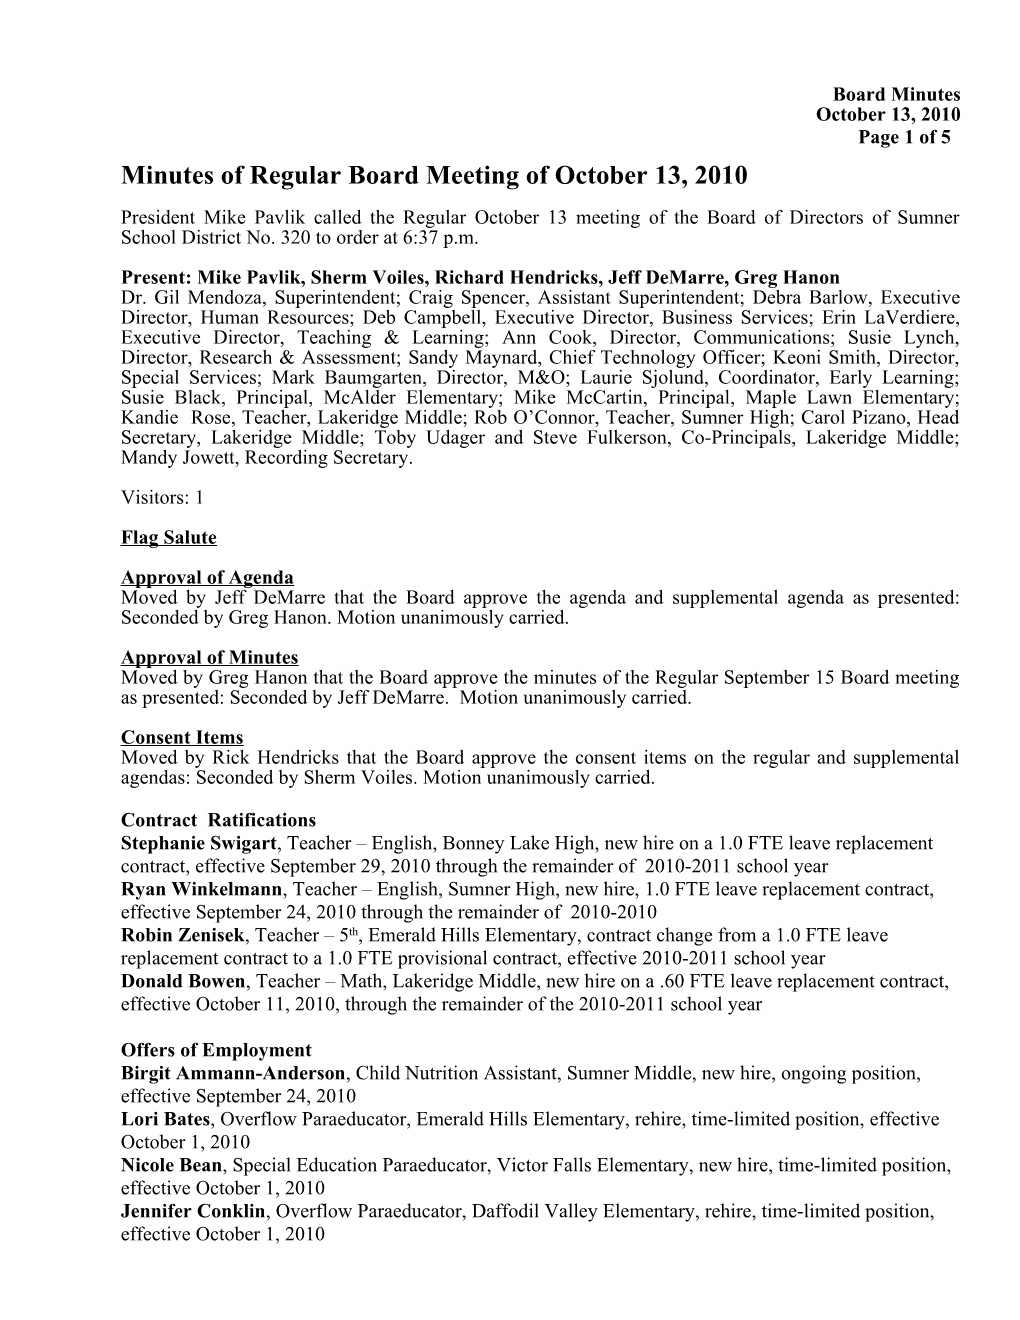 Minutes of Regular Board Meeting of October 13, 2010